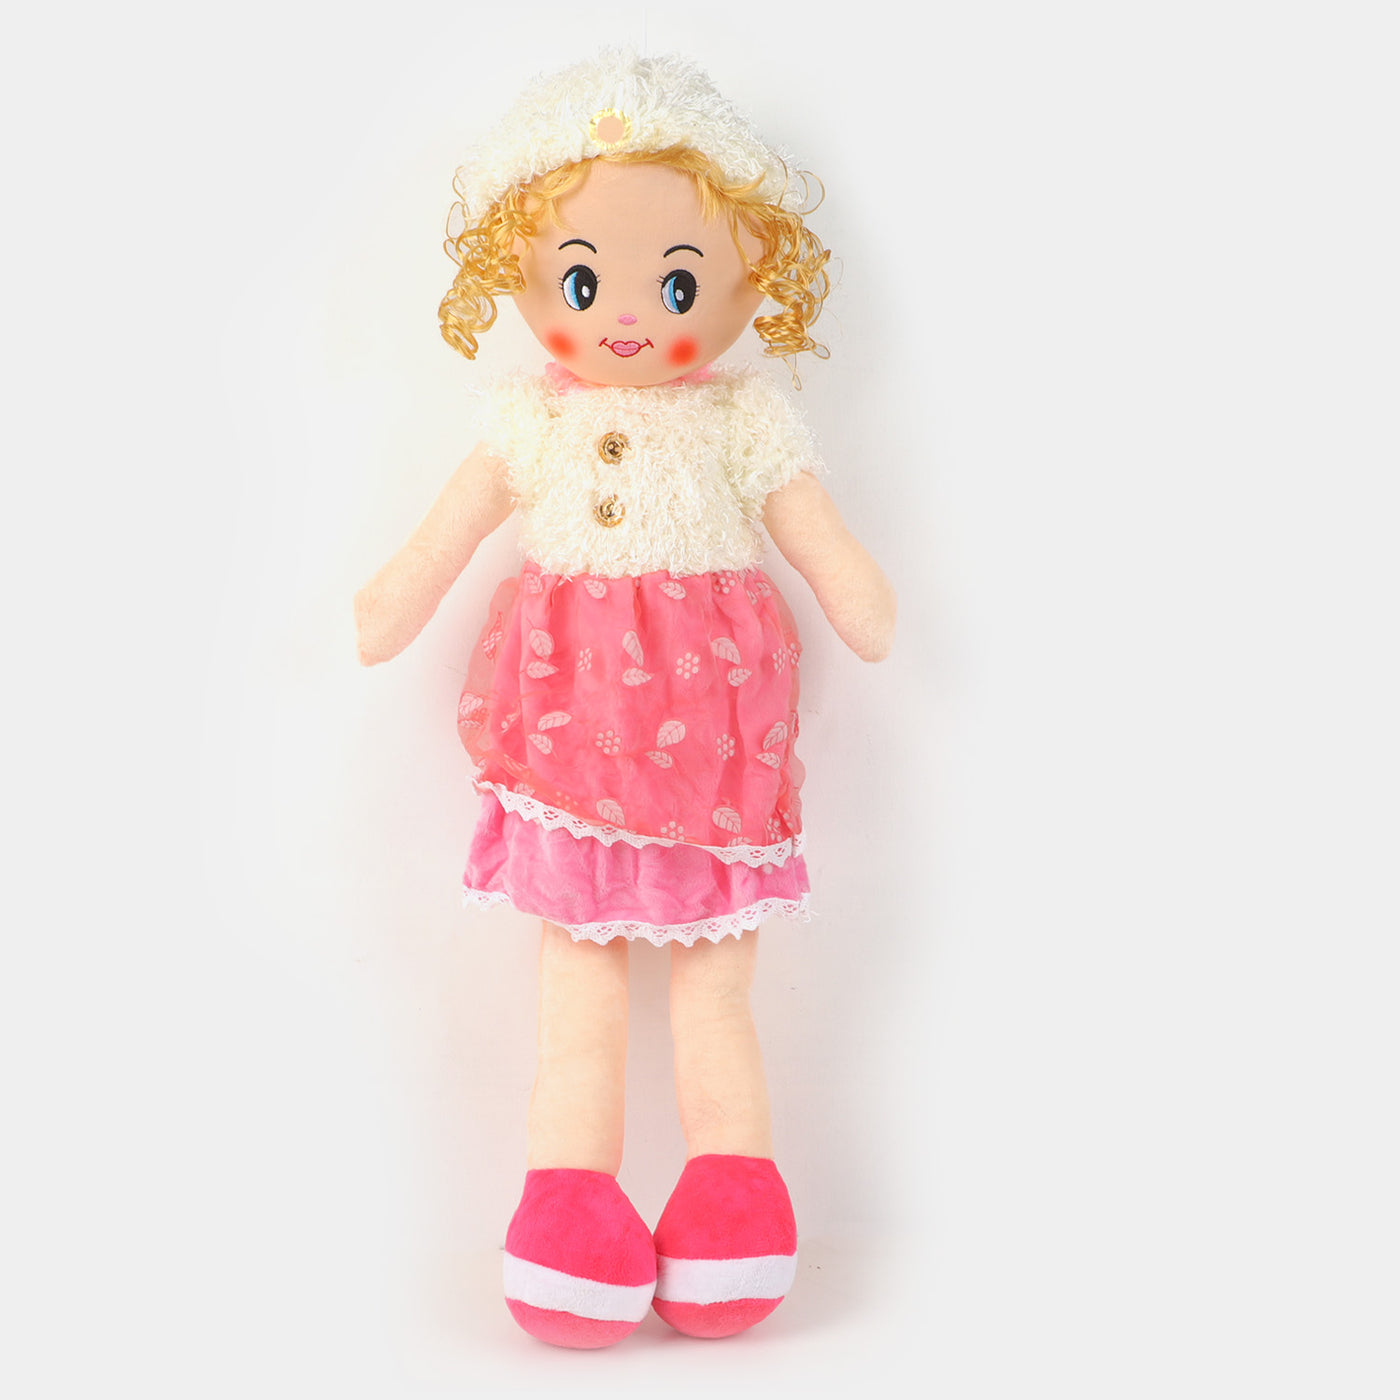 Super Soft Stuffed Doll For Kids